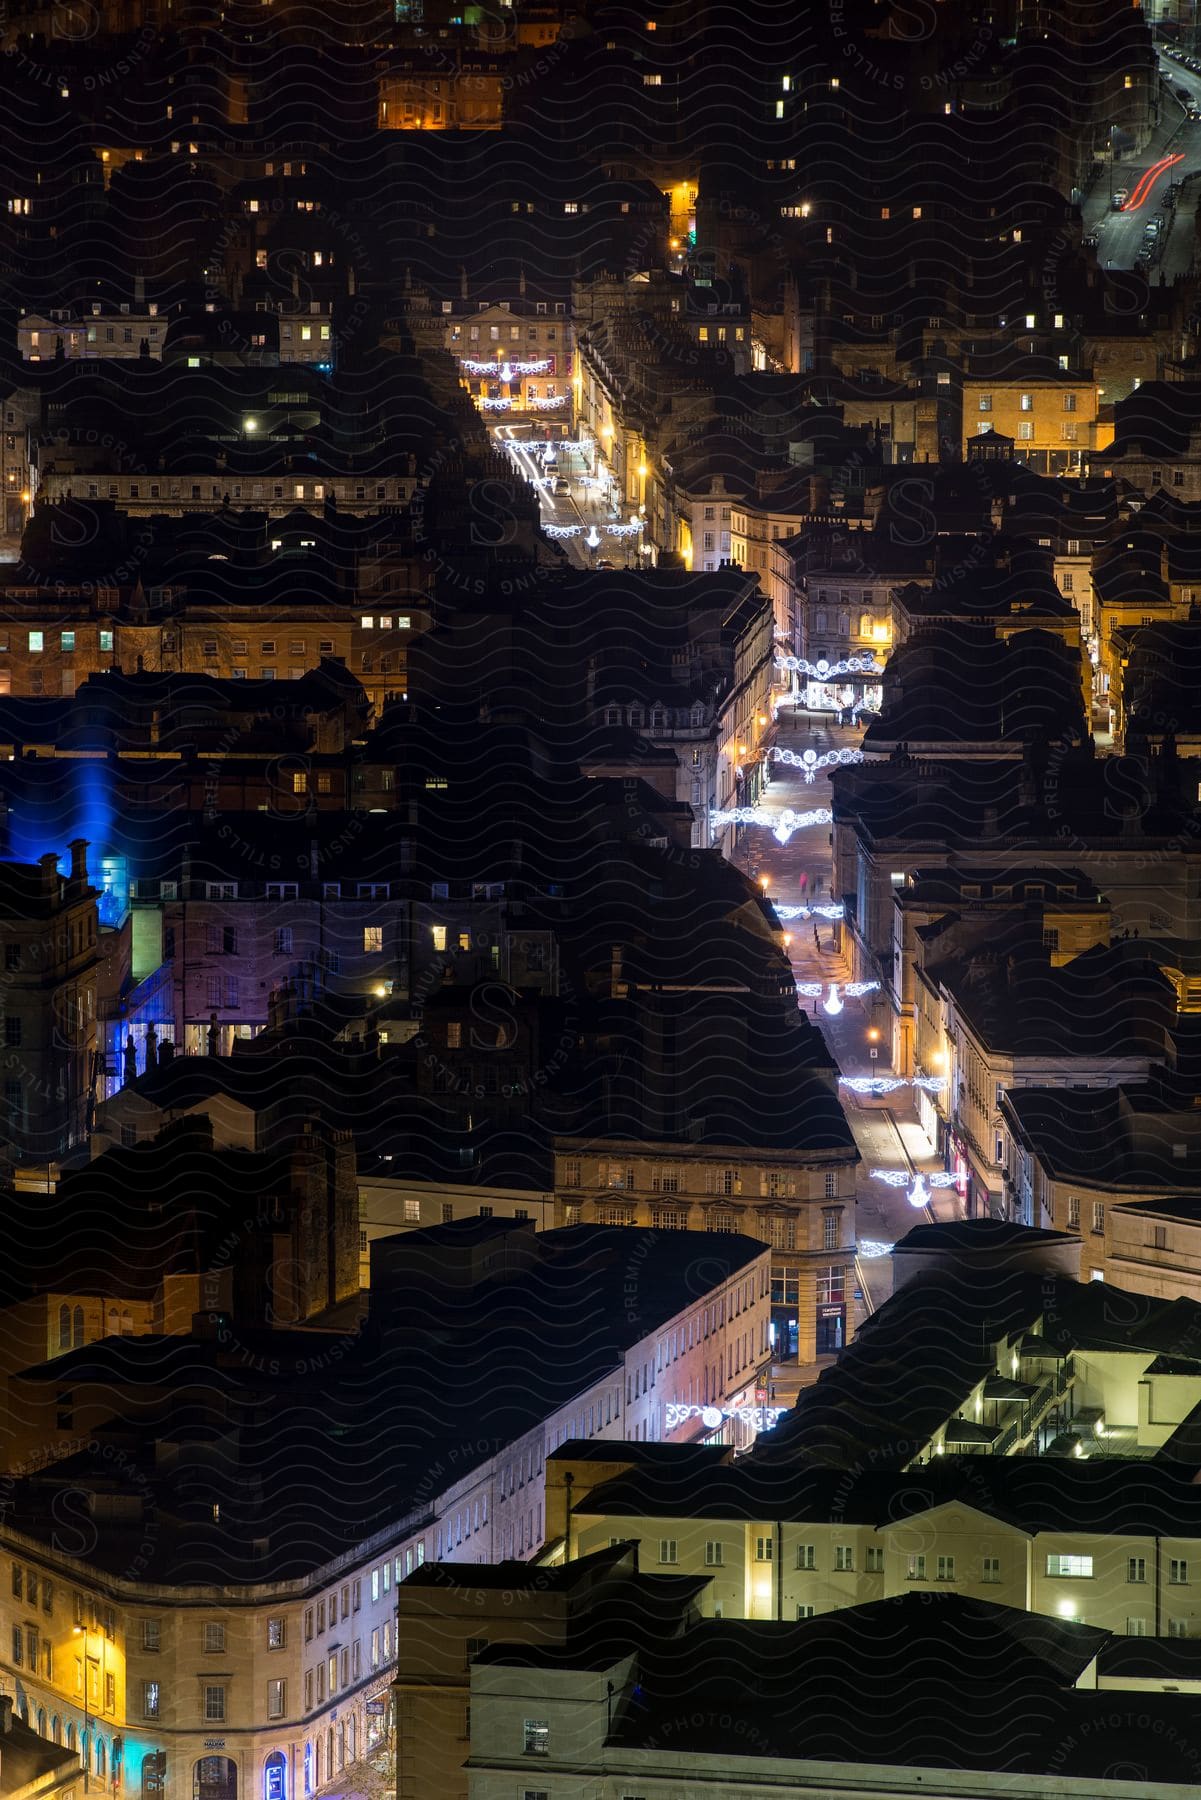 A brightly lit street runs through a european city at night